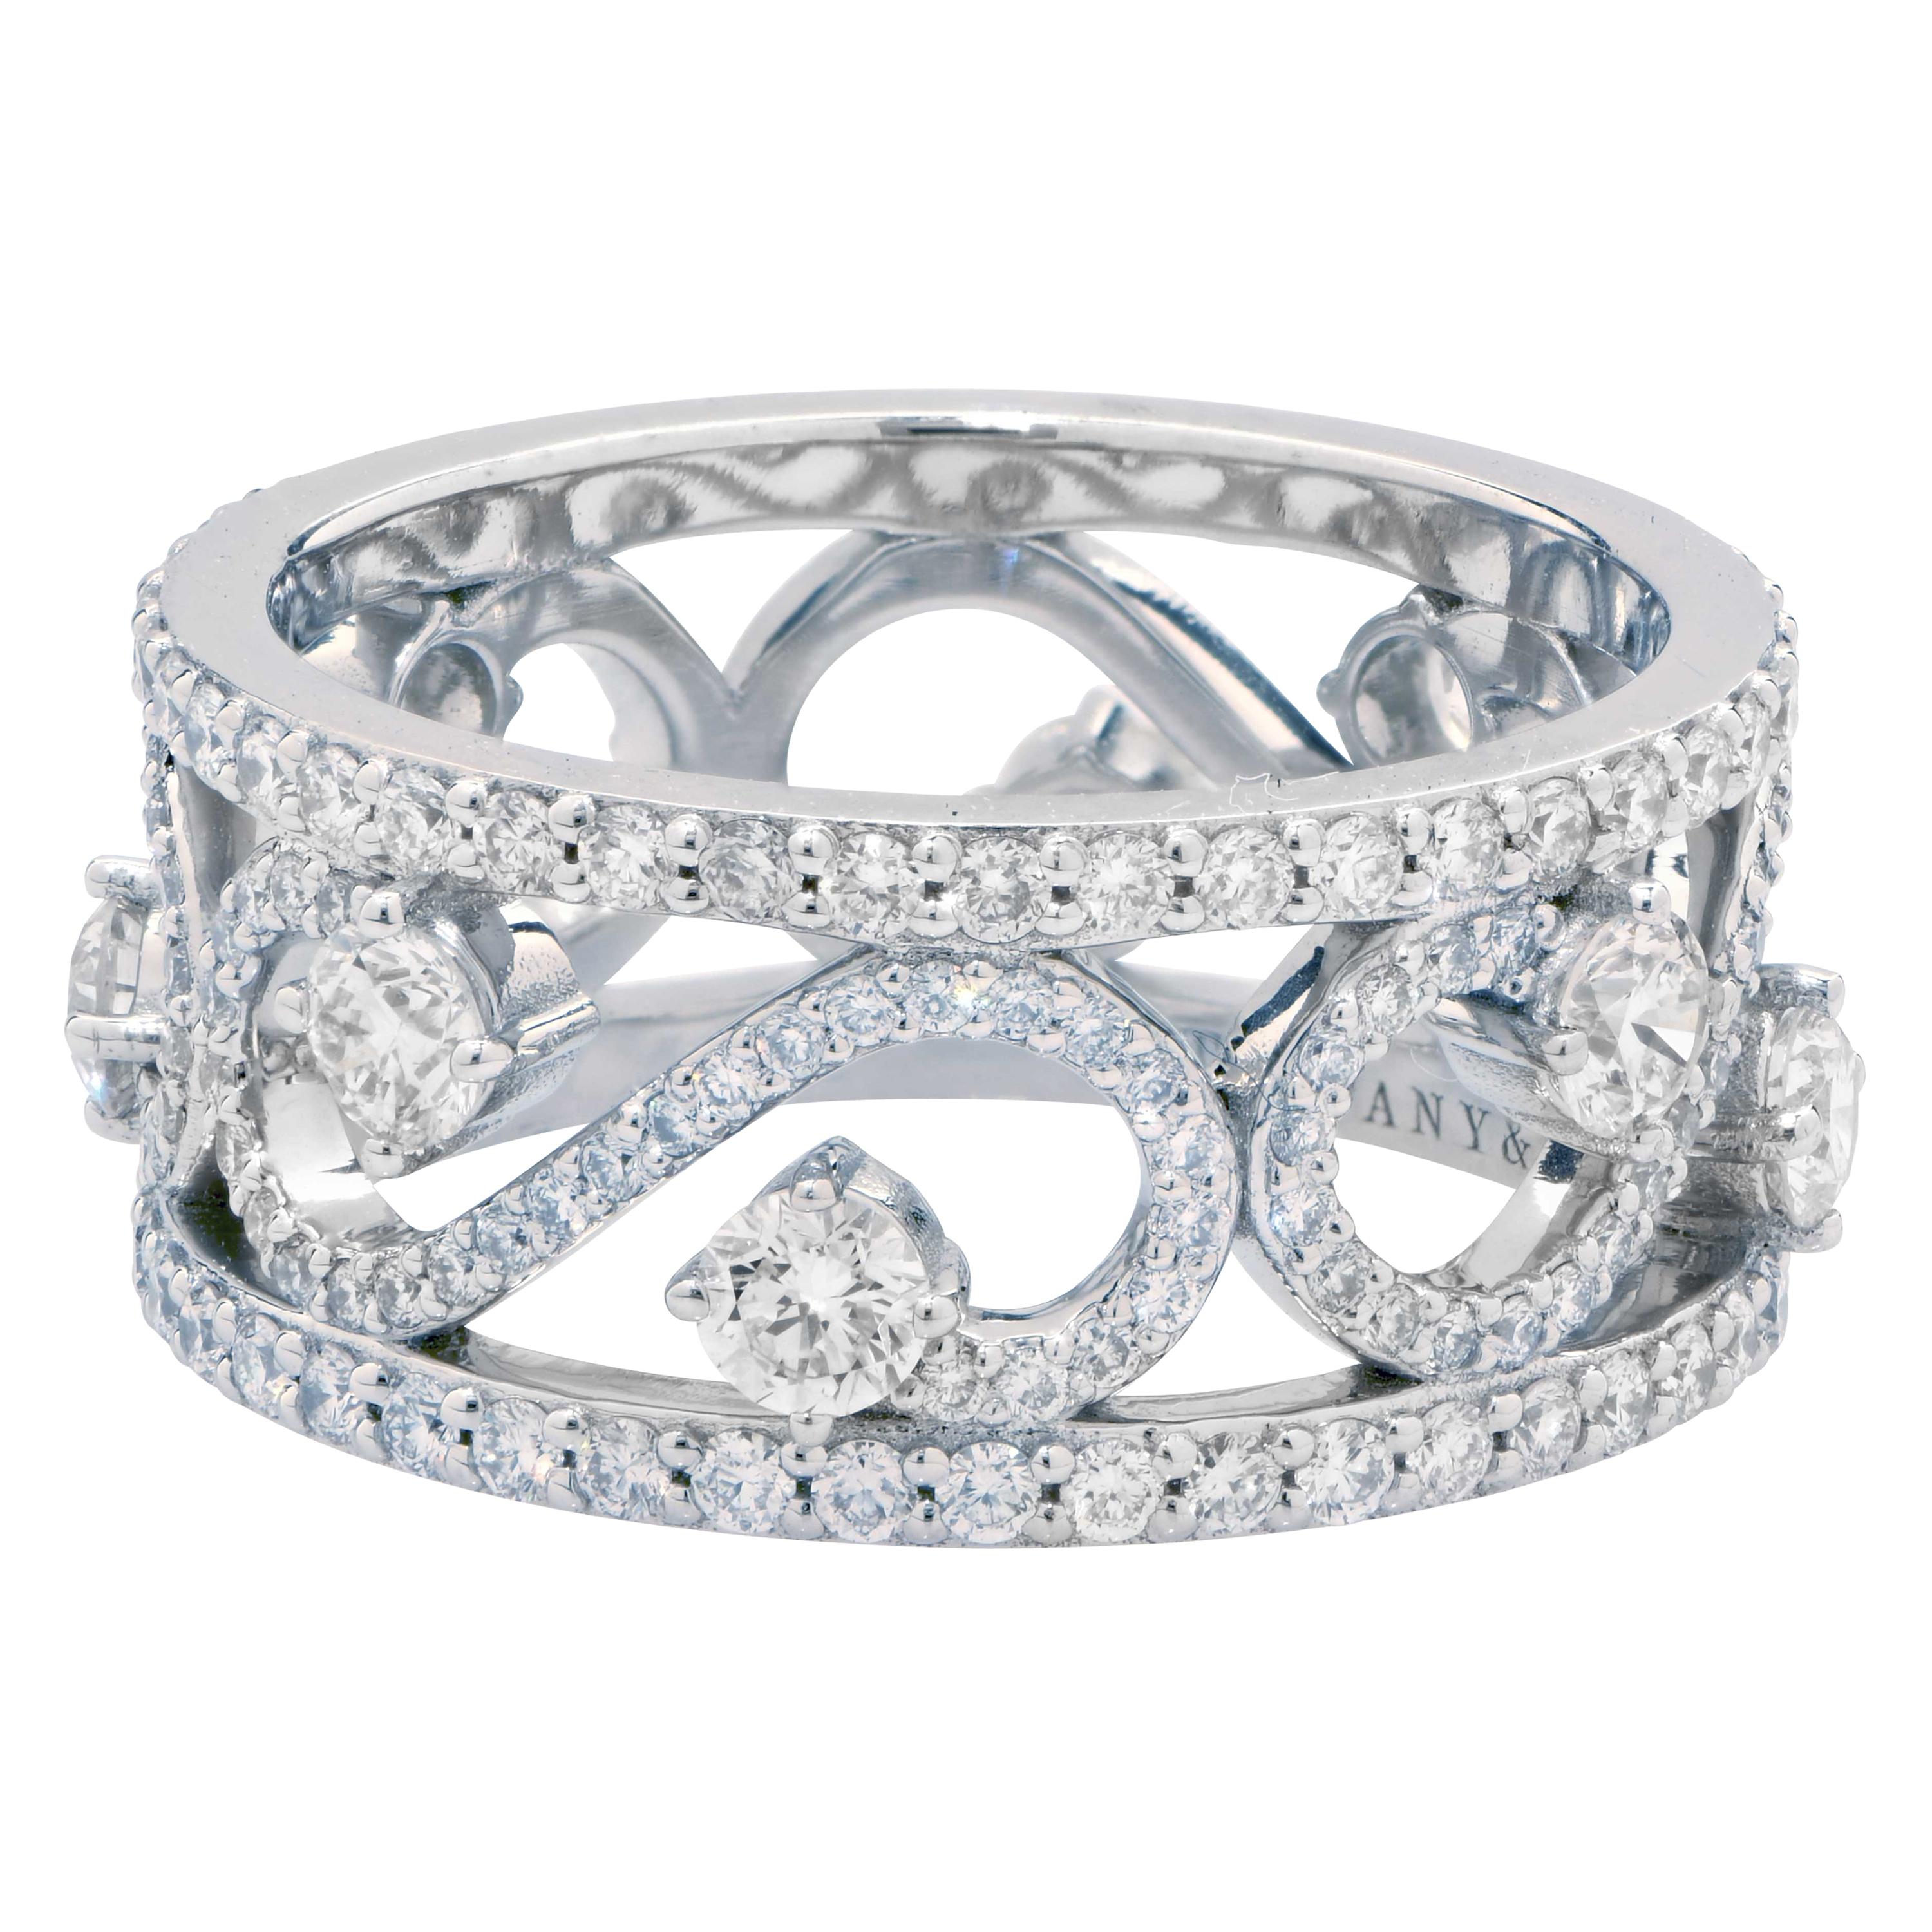 Tiffany & Co. Enchant Scroll Band Ring in 18 Karat White Gold